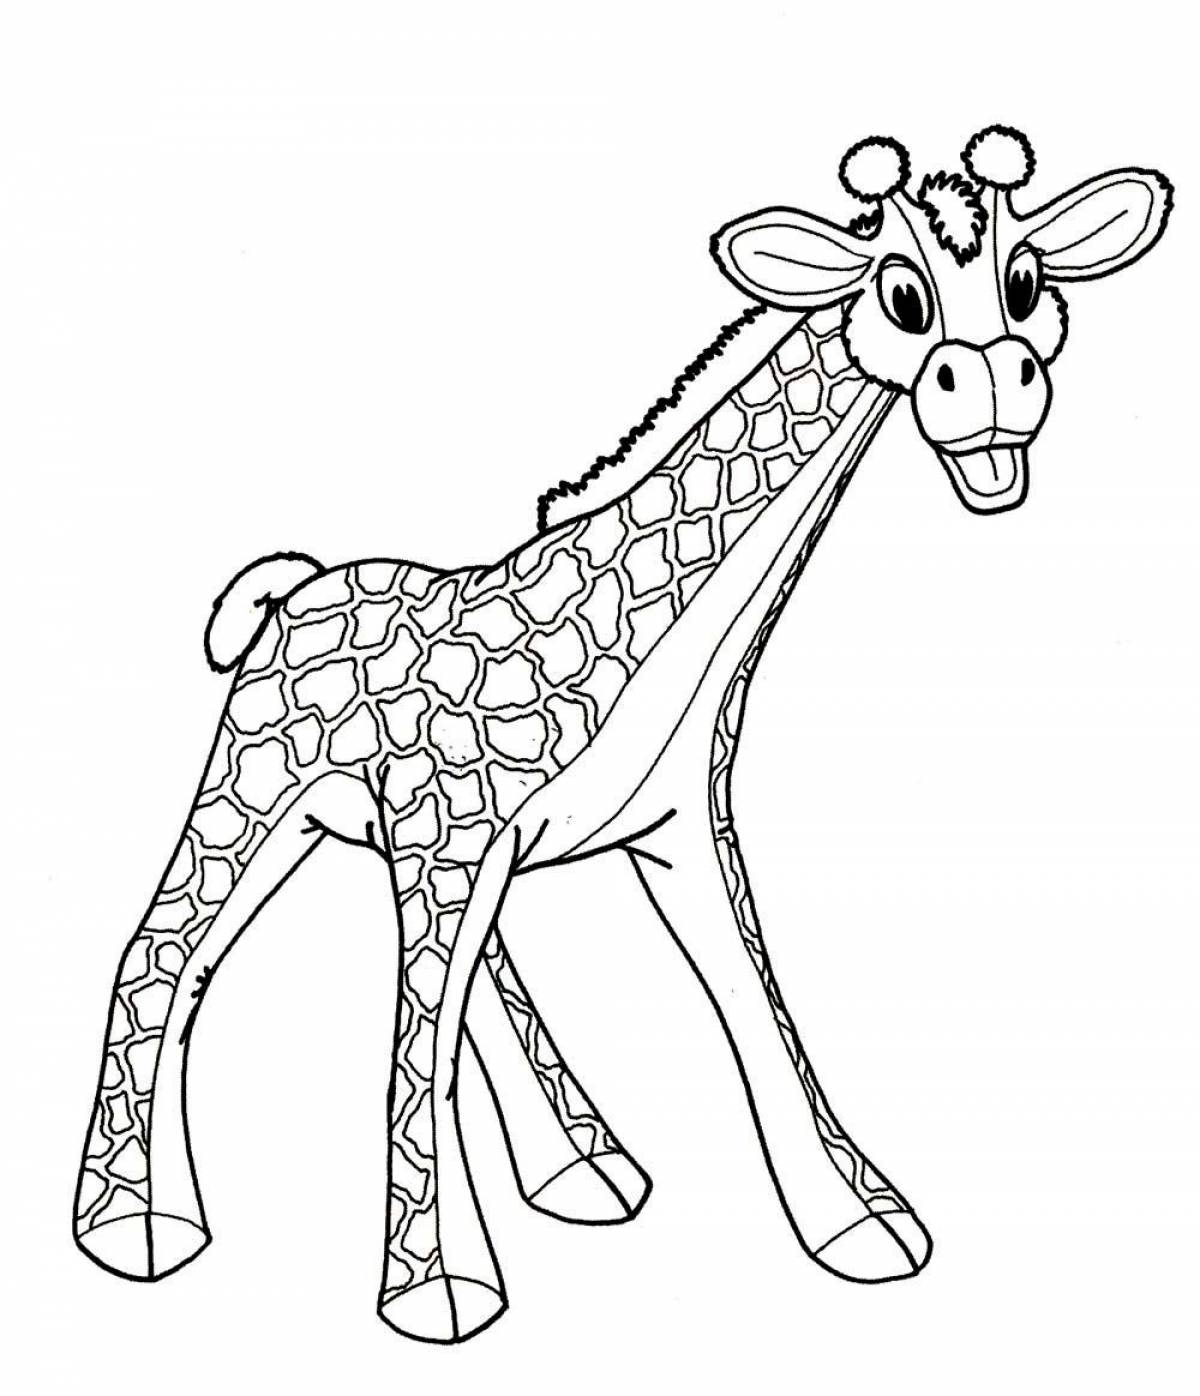 Giraffe pattern for kids #6